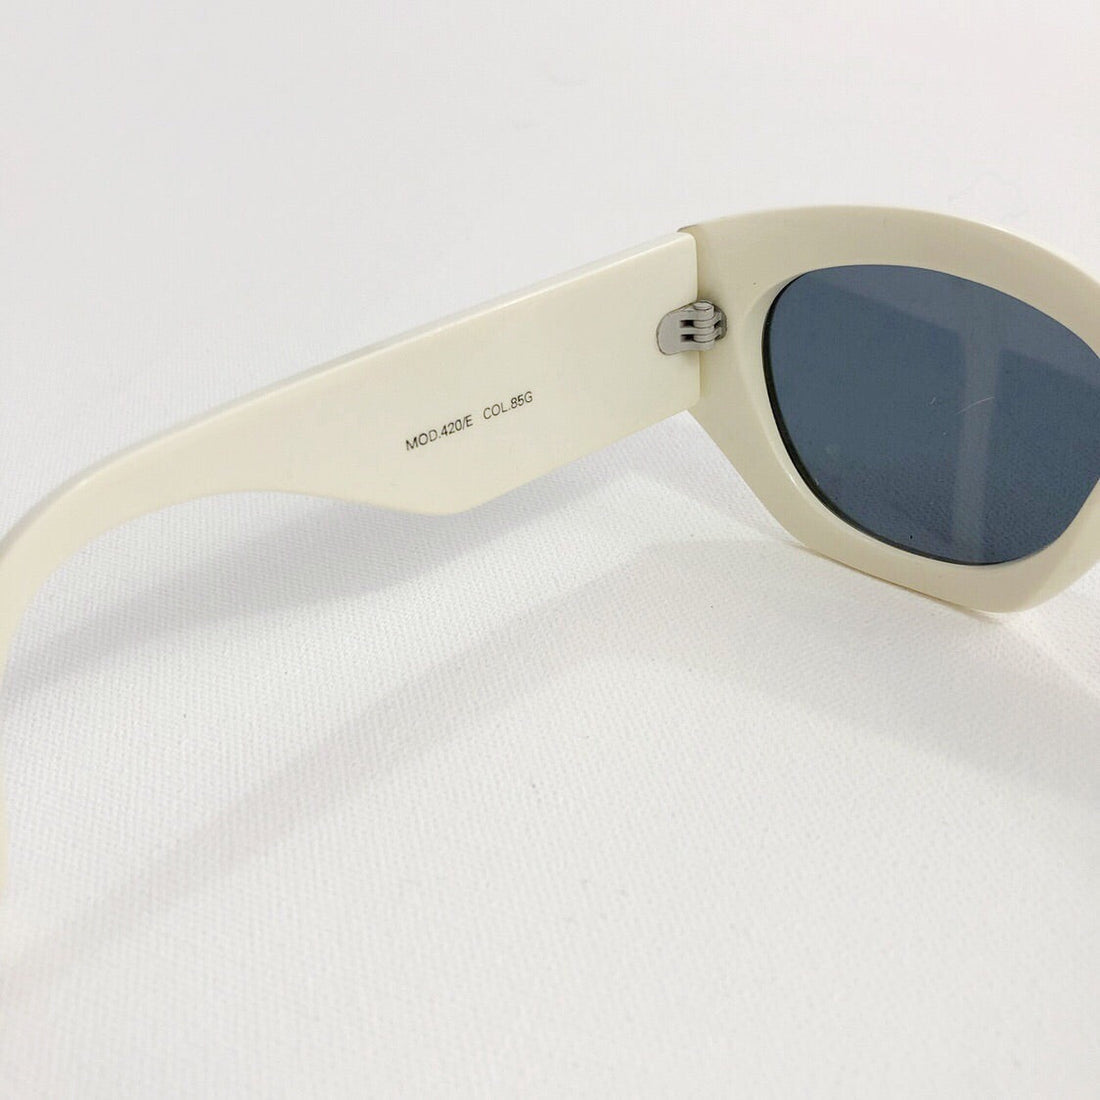 Gianni Versace 90’s Mod 420/ E sunglasses